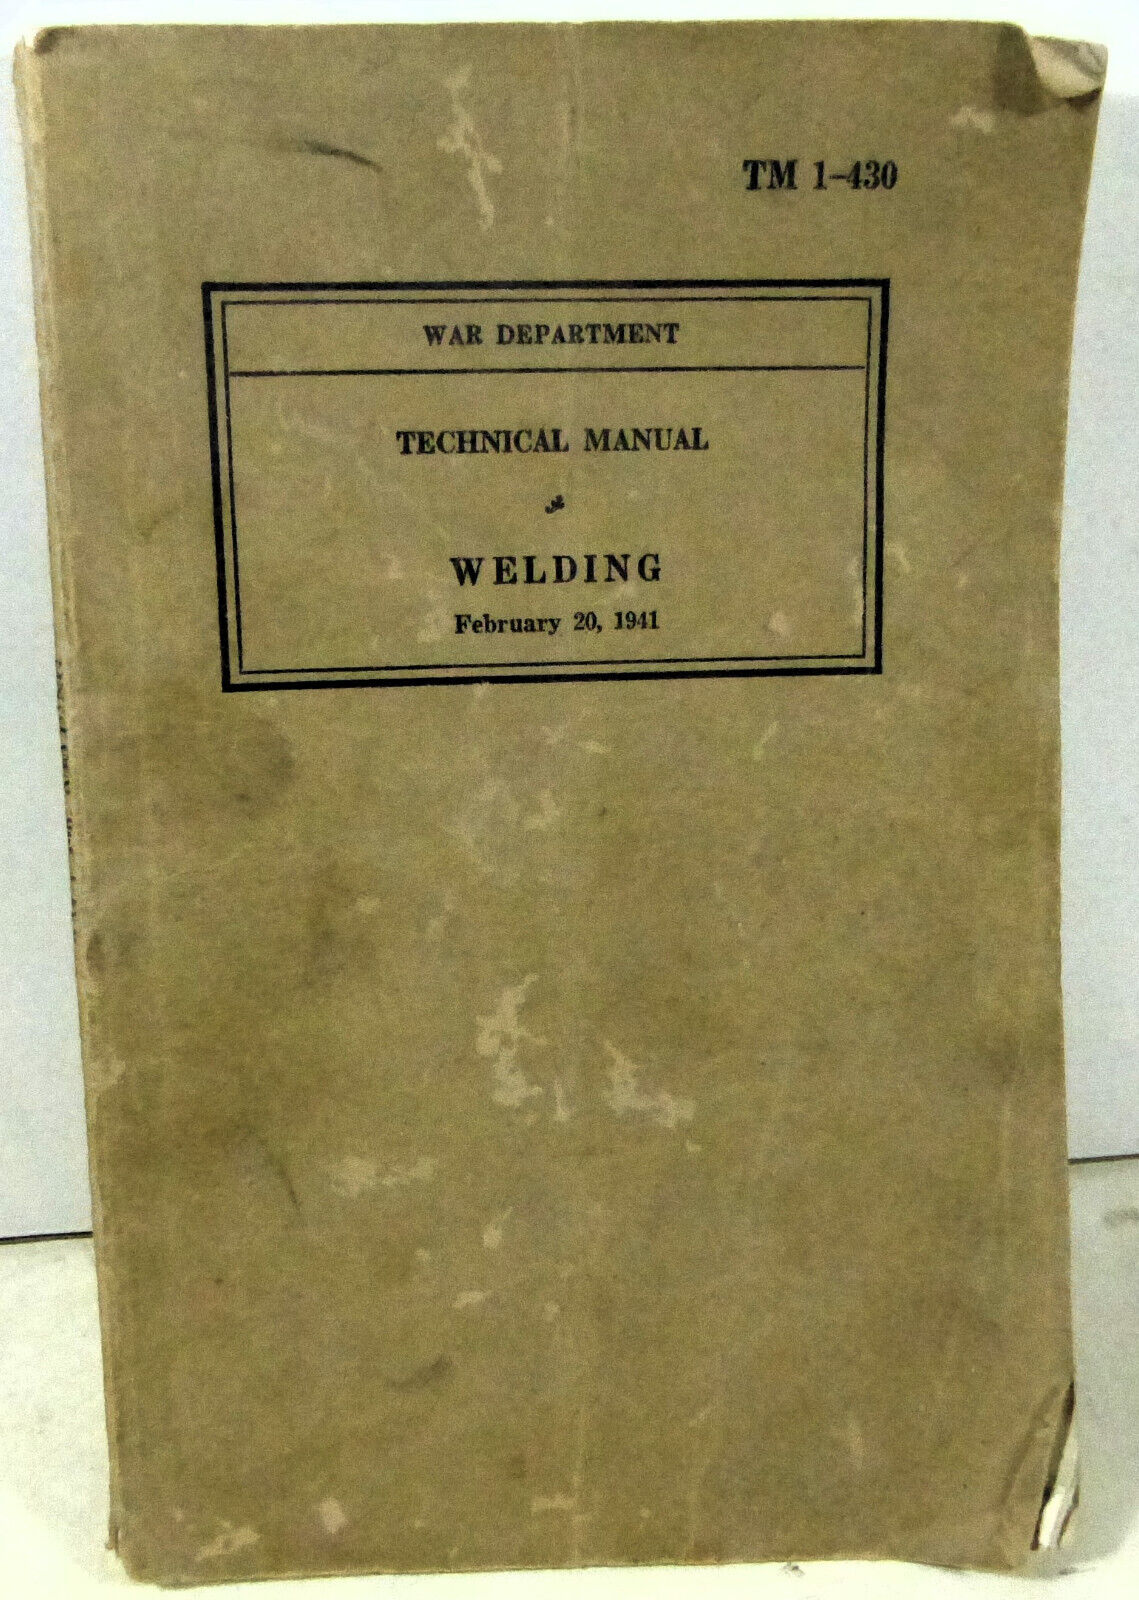 WAR DEPARTMENT~TECH MANUAL Welding  February 20, 1941 Issued~TM 1-430